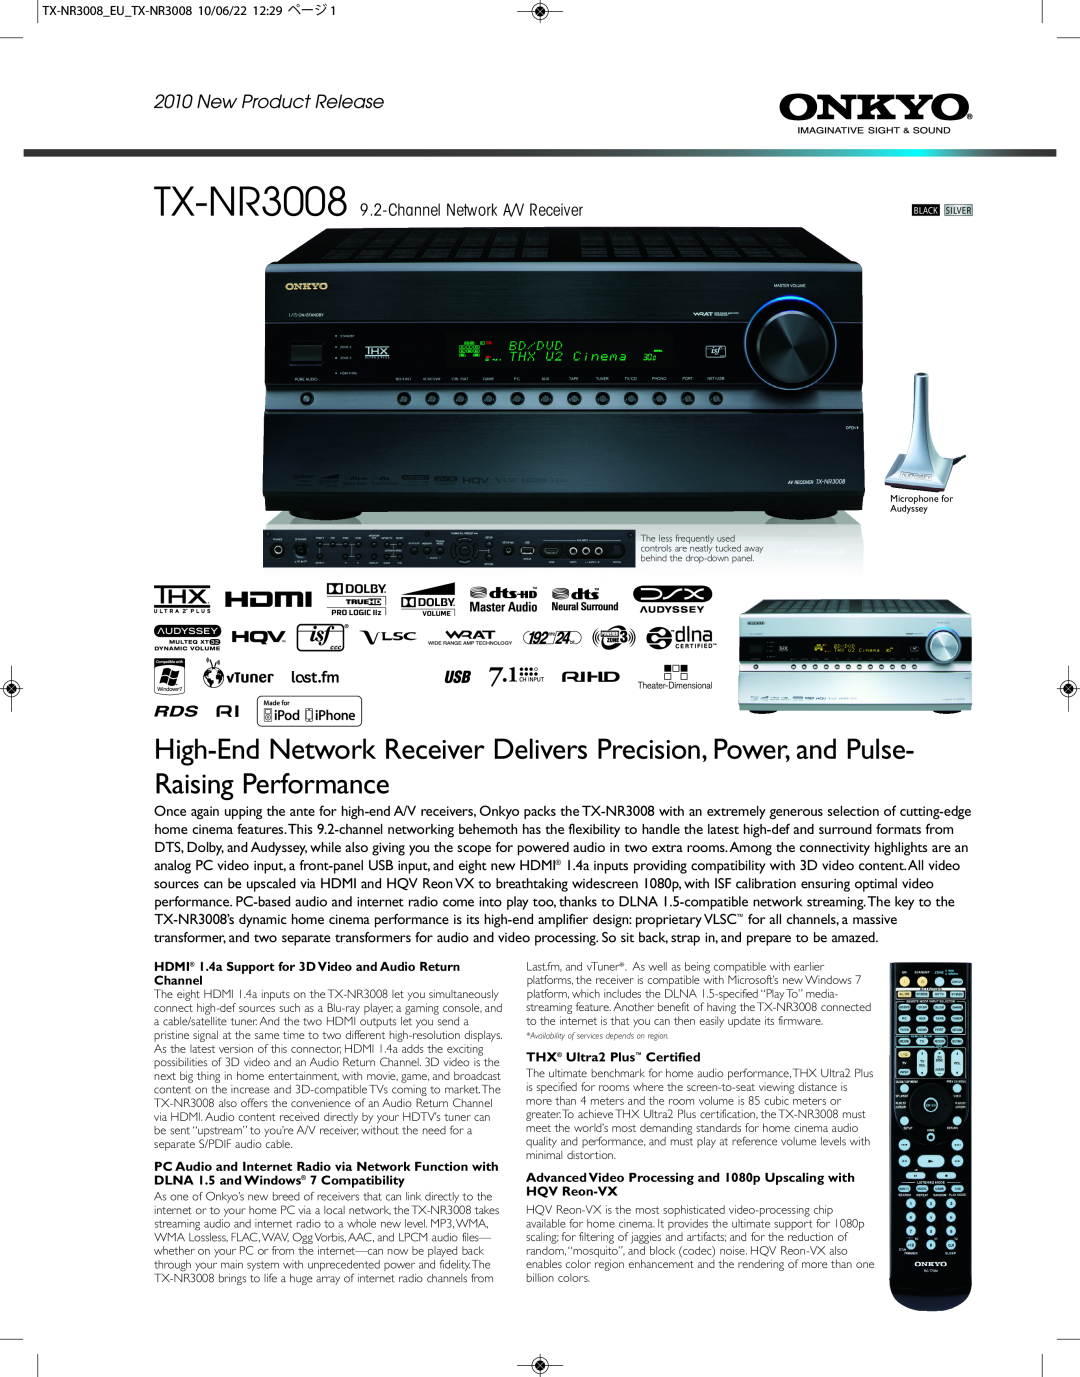 Onkyo manual TX-NR3008 9.2-ChannelNetwork A/V Receiver 